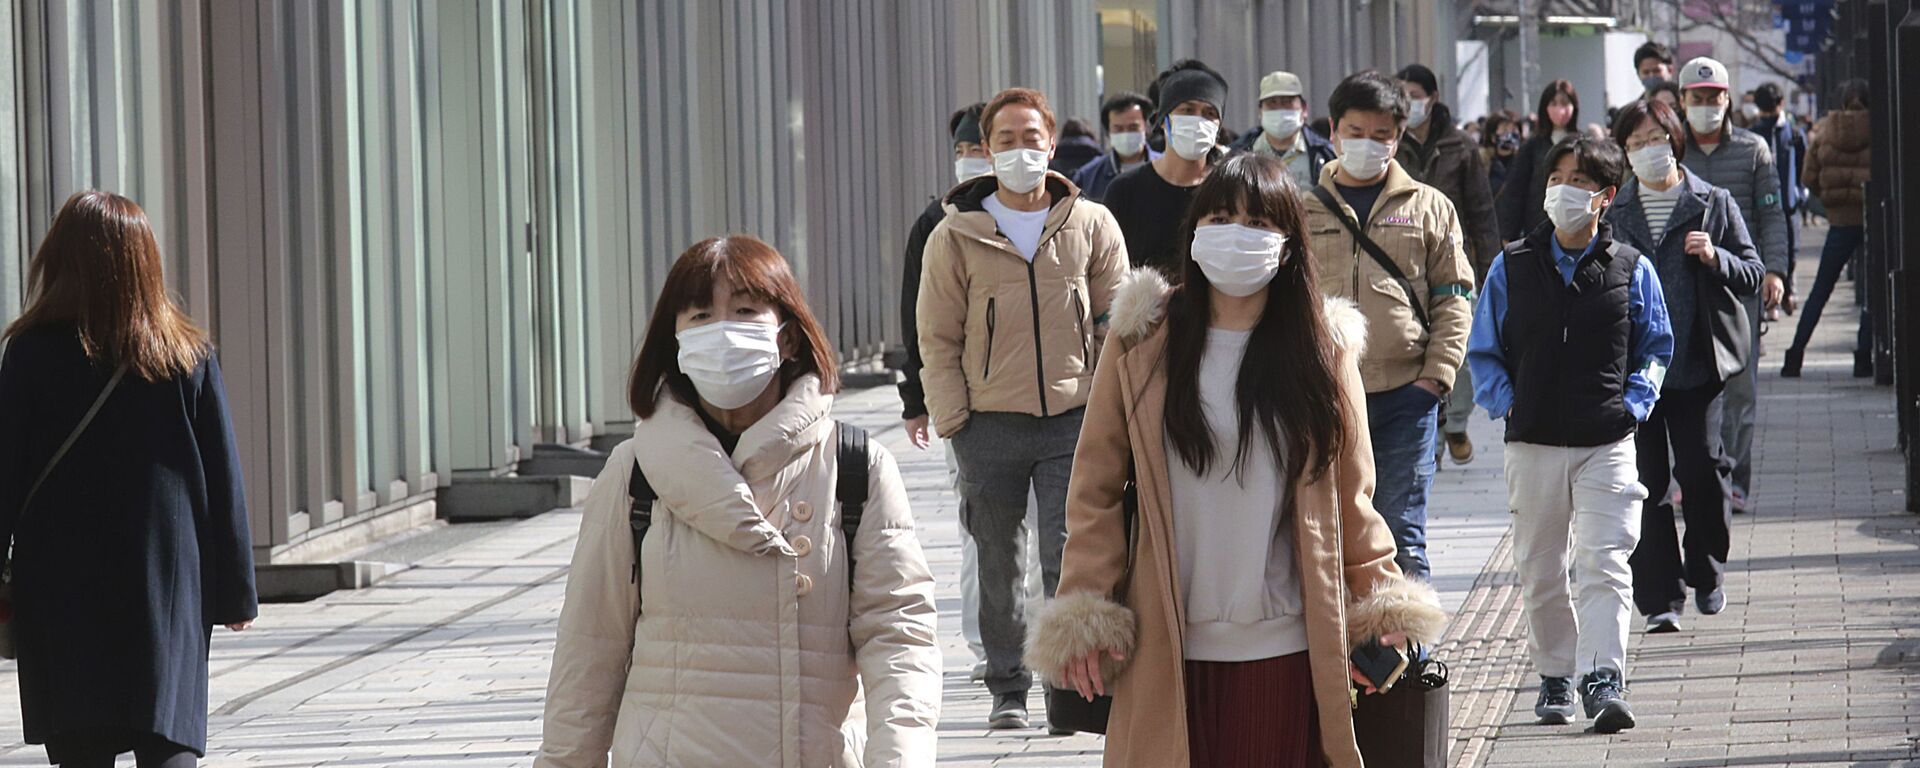 Пандемия коронавируса COVID 19 - люди в масках в Токио, Япония - Sputnik Грузия, 1920, 26.03.2021